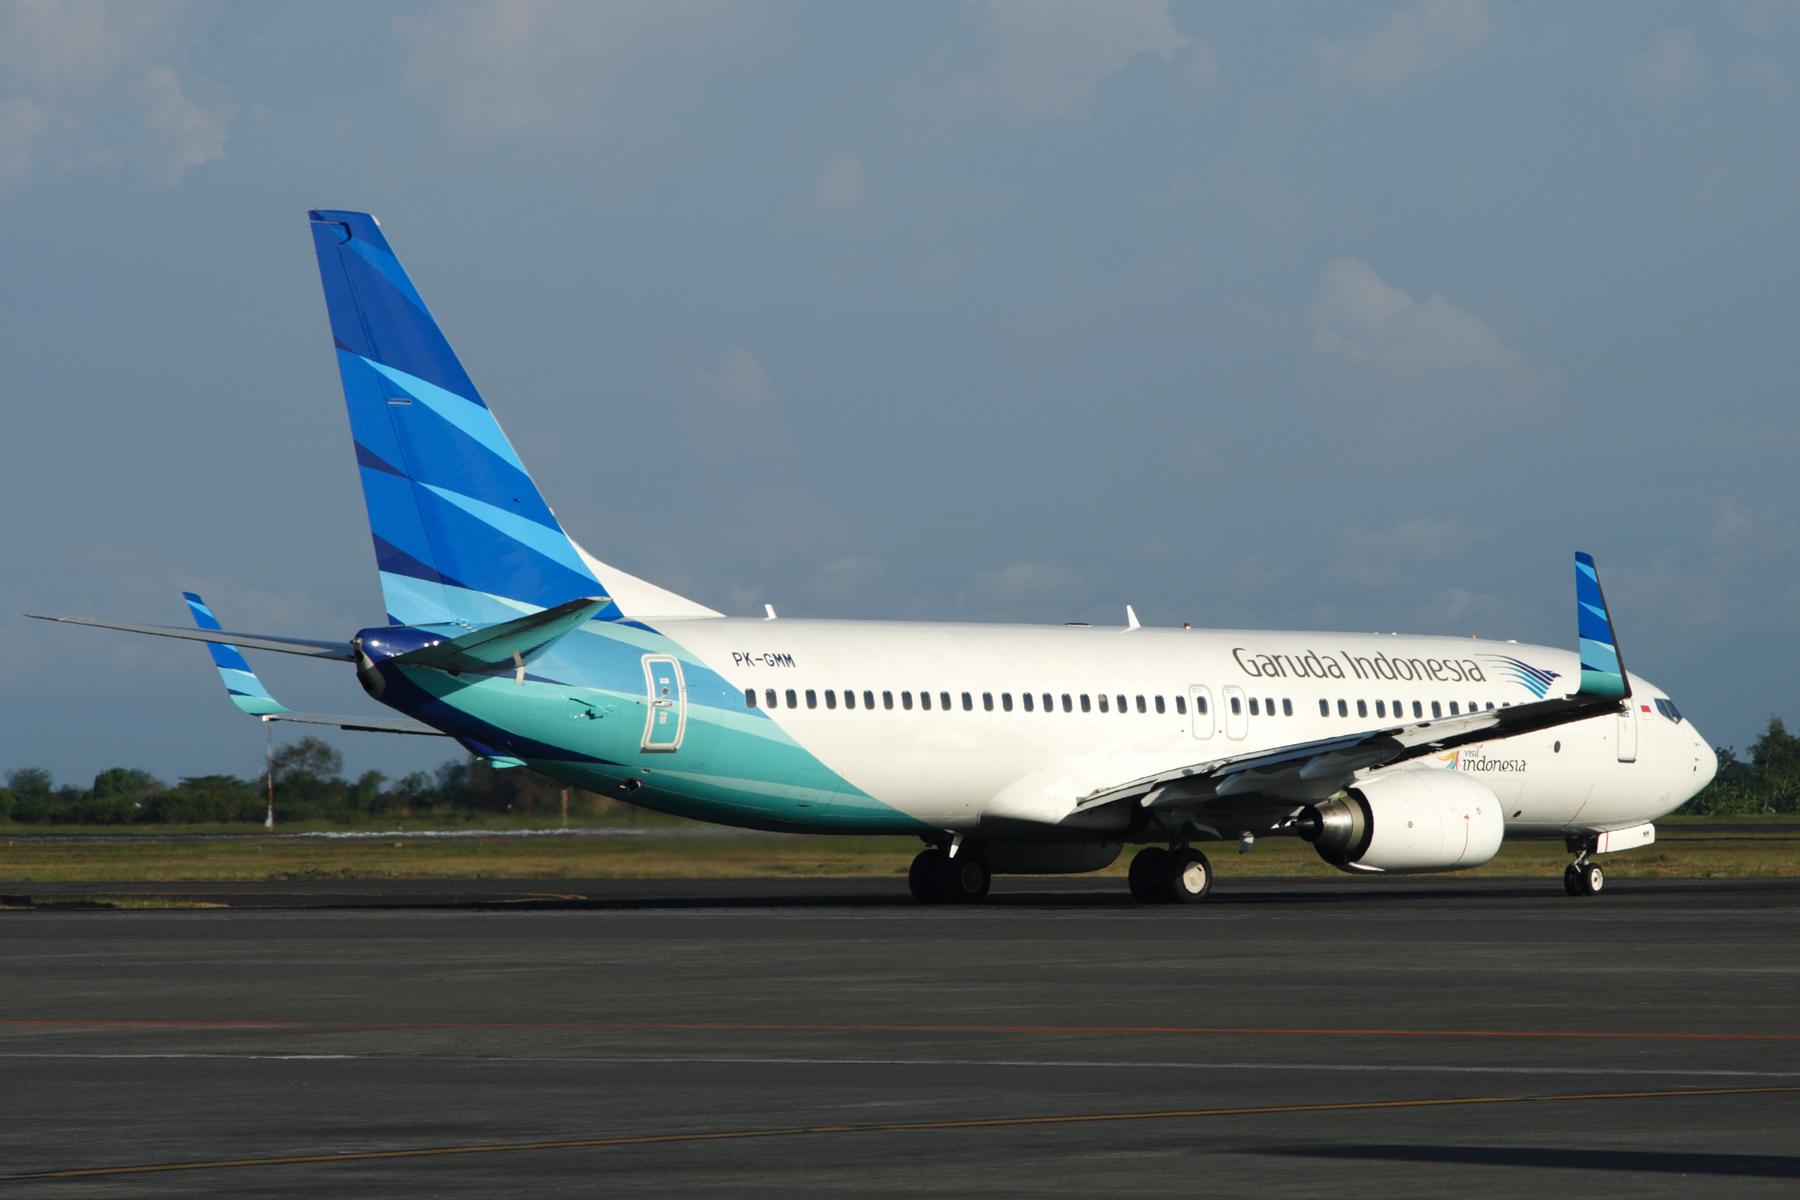 Garuda Indonesia 737-800